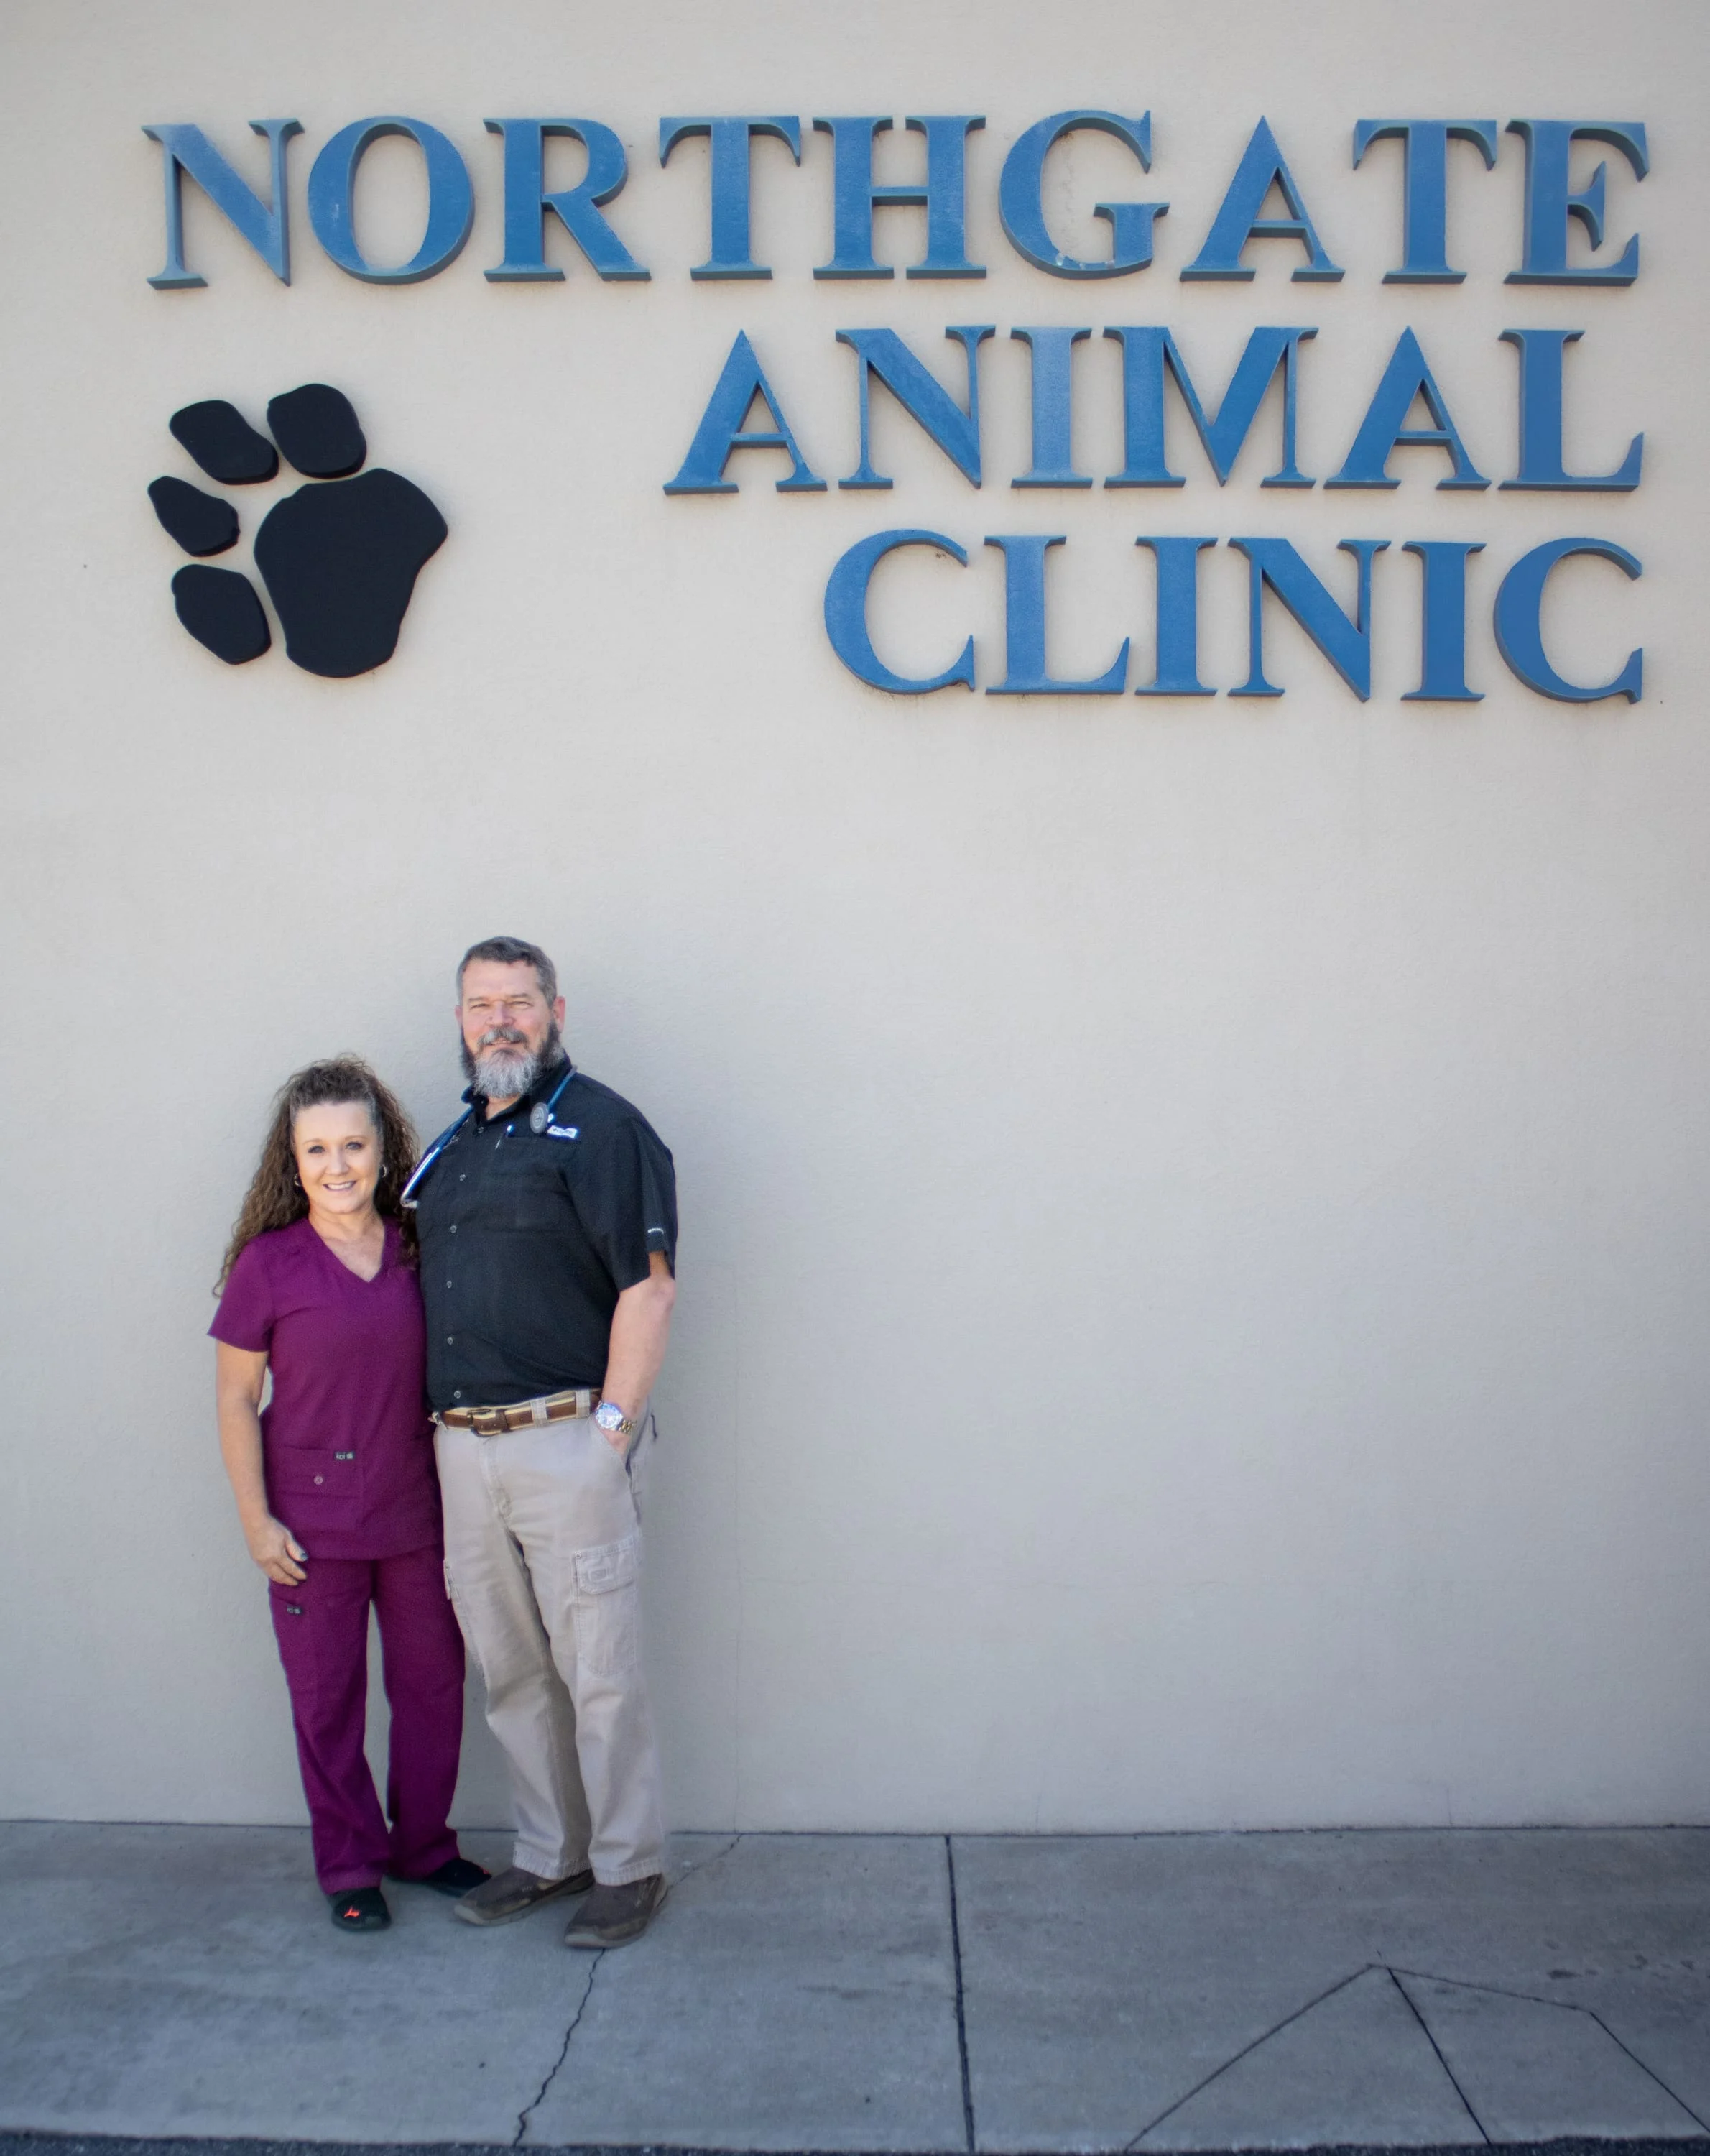 animal clinic